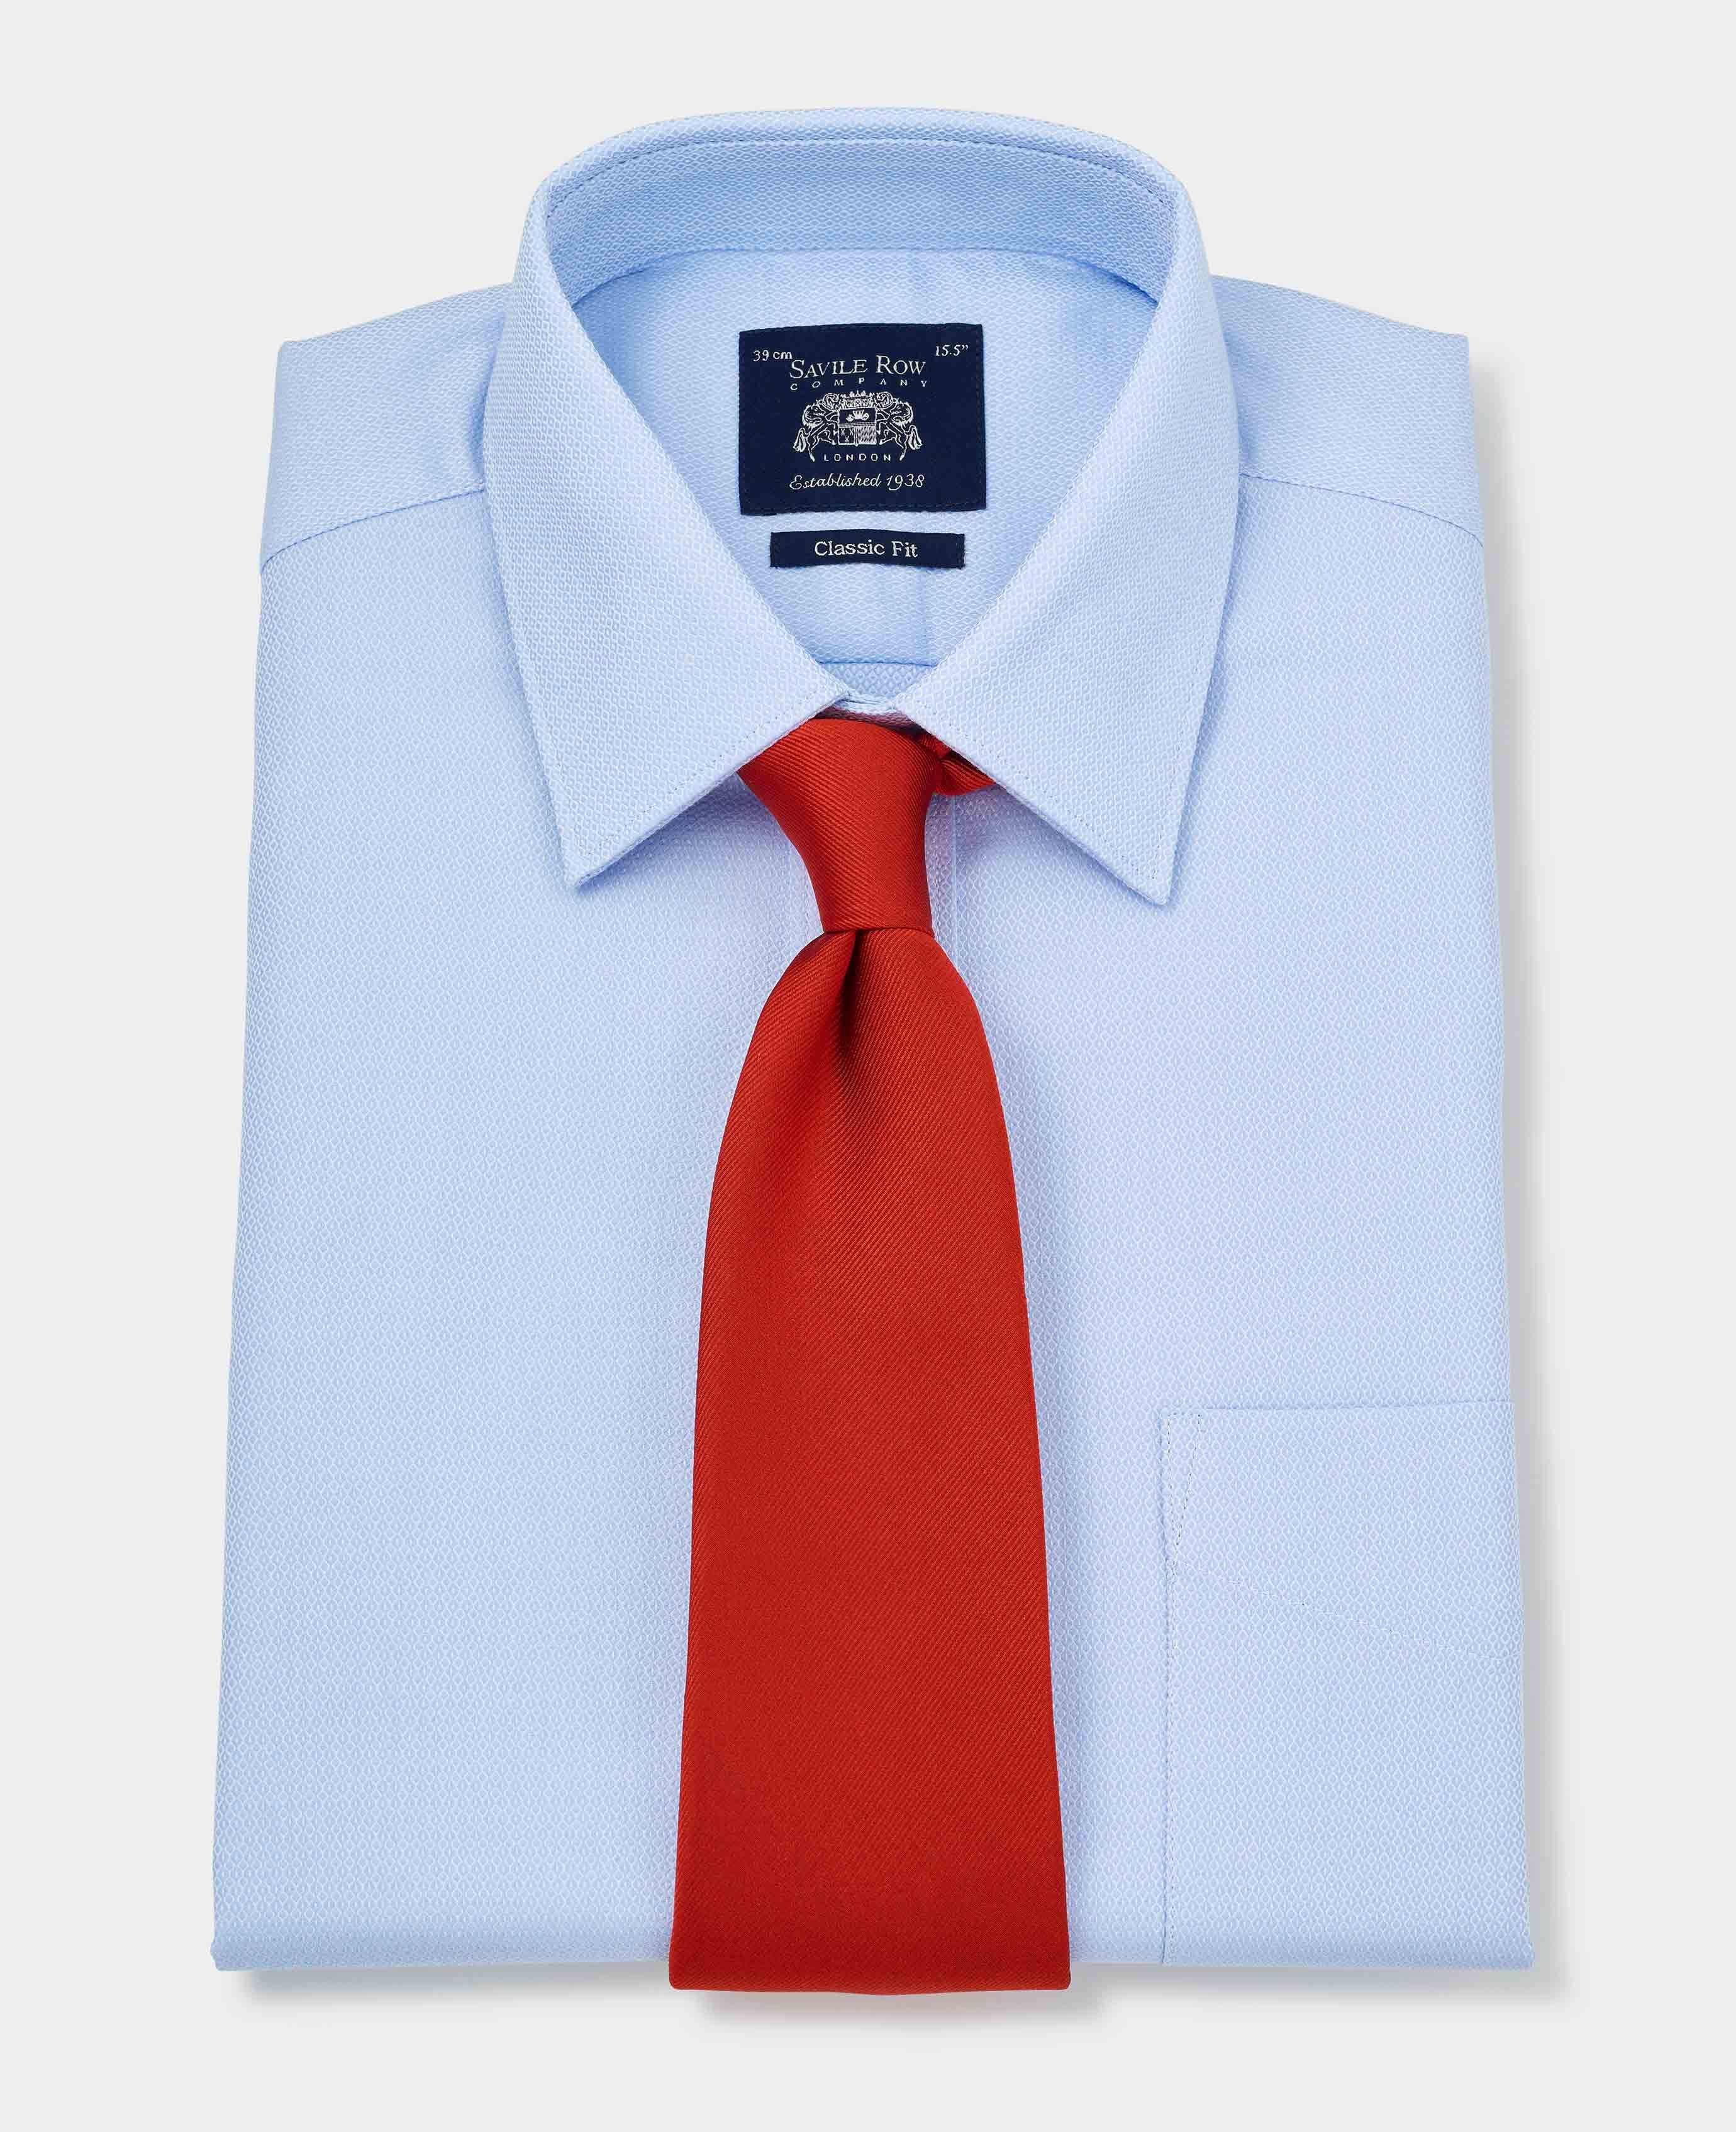 Men's Sky Blue Twill Classic Fit Formal Shirt | Savile Row Co